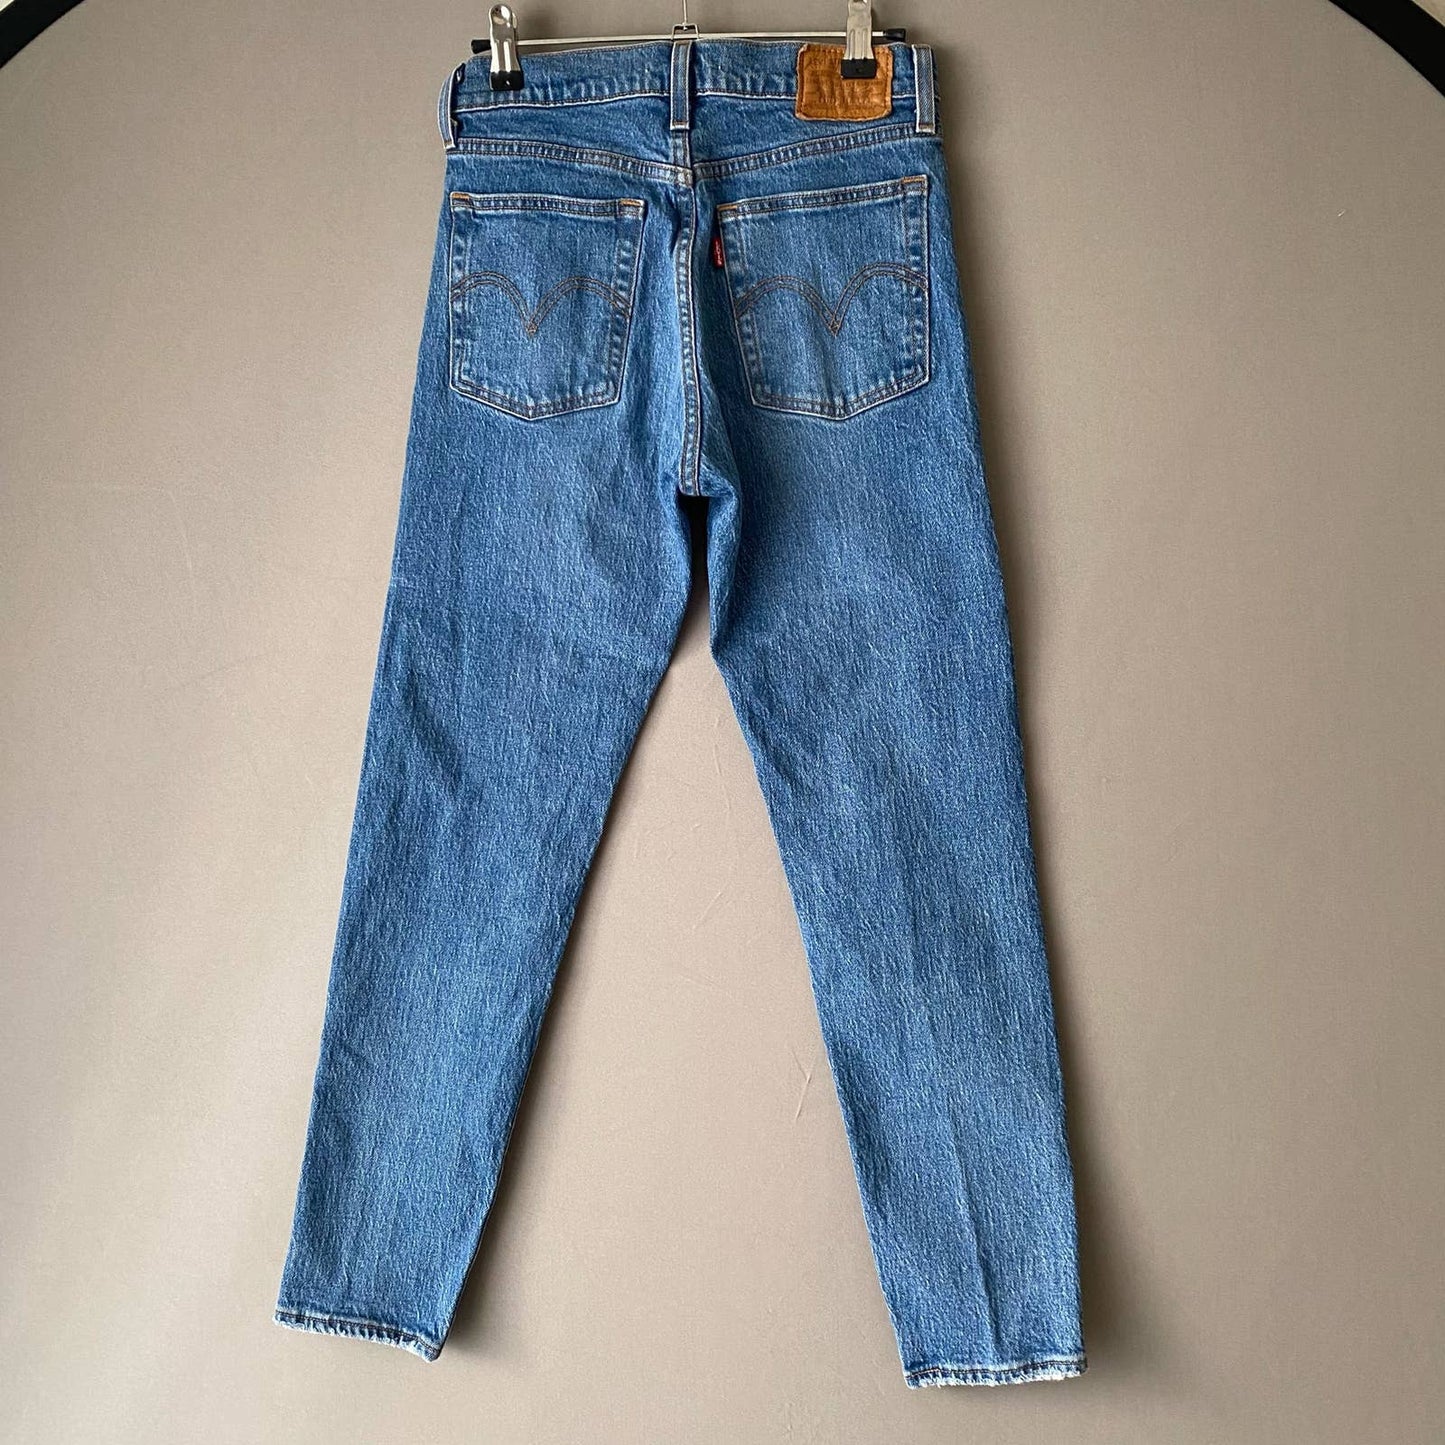 Levi’s Premium sz 25 Wedgie jeans